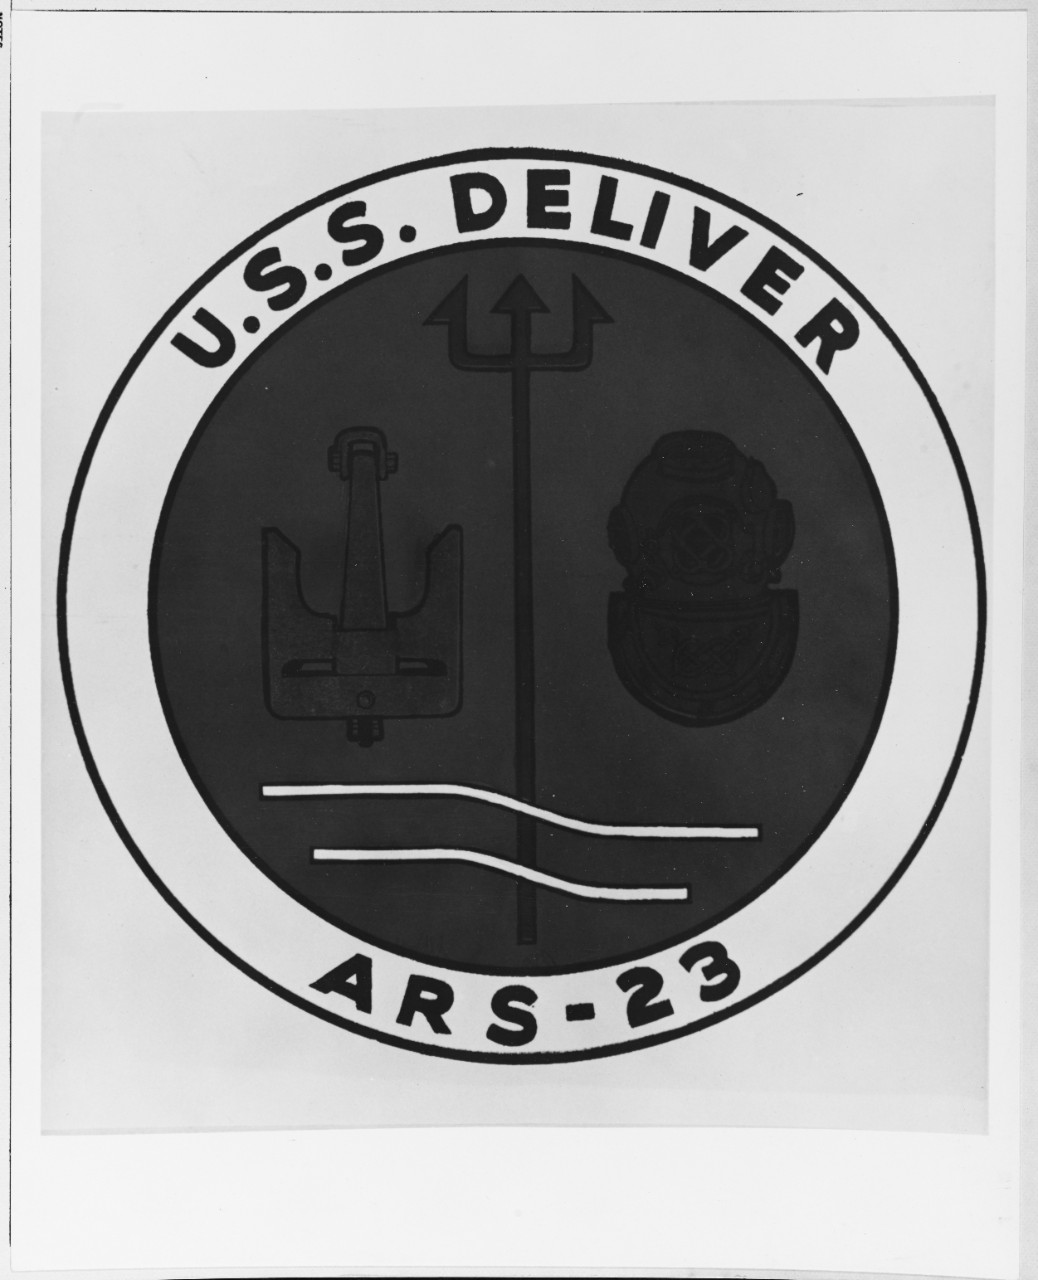 Insignia: USS DELIVER (ARS-23)